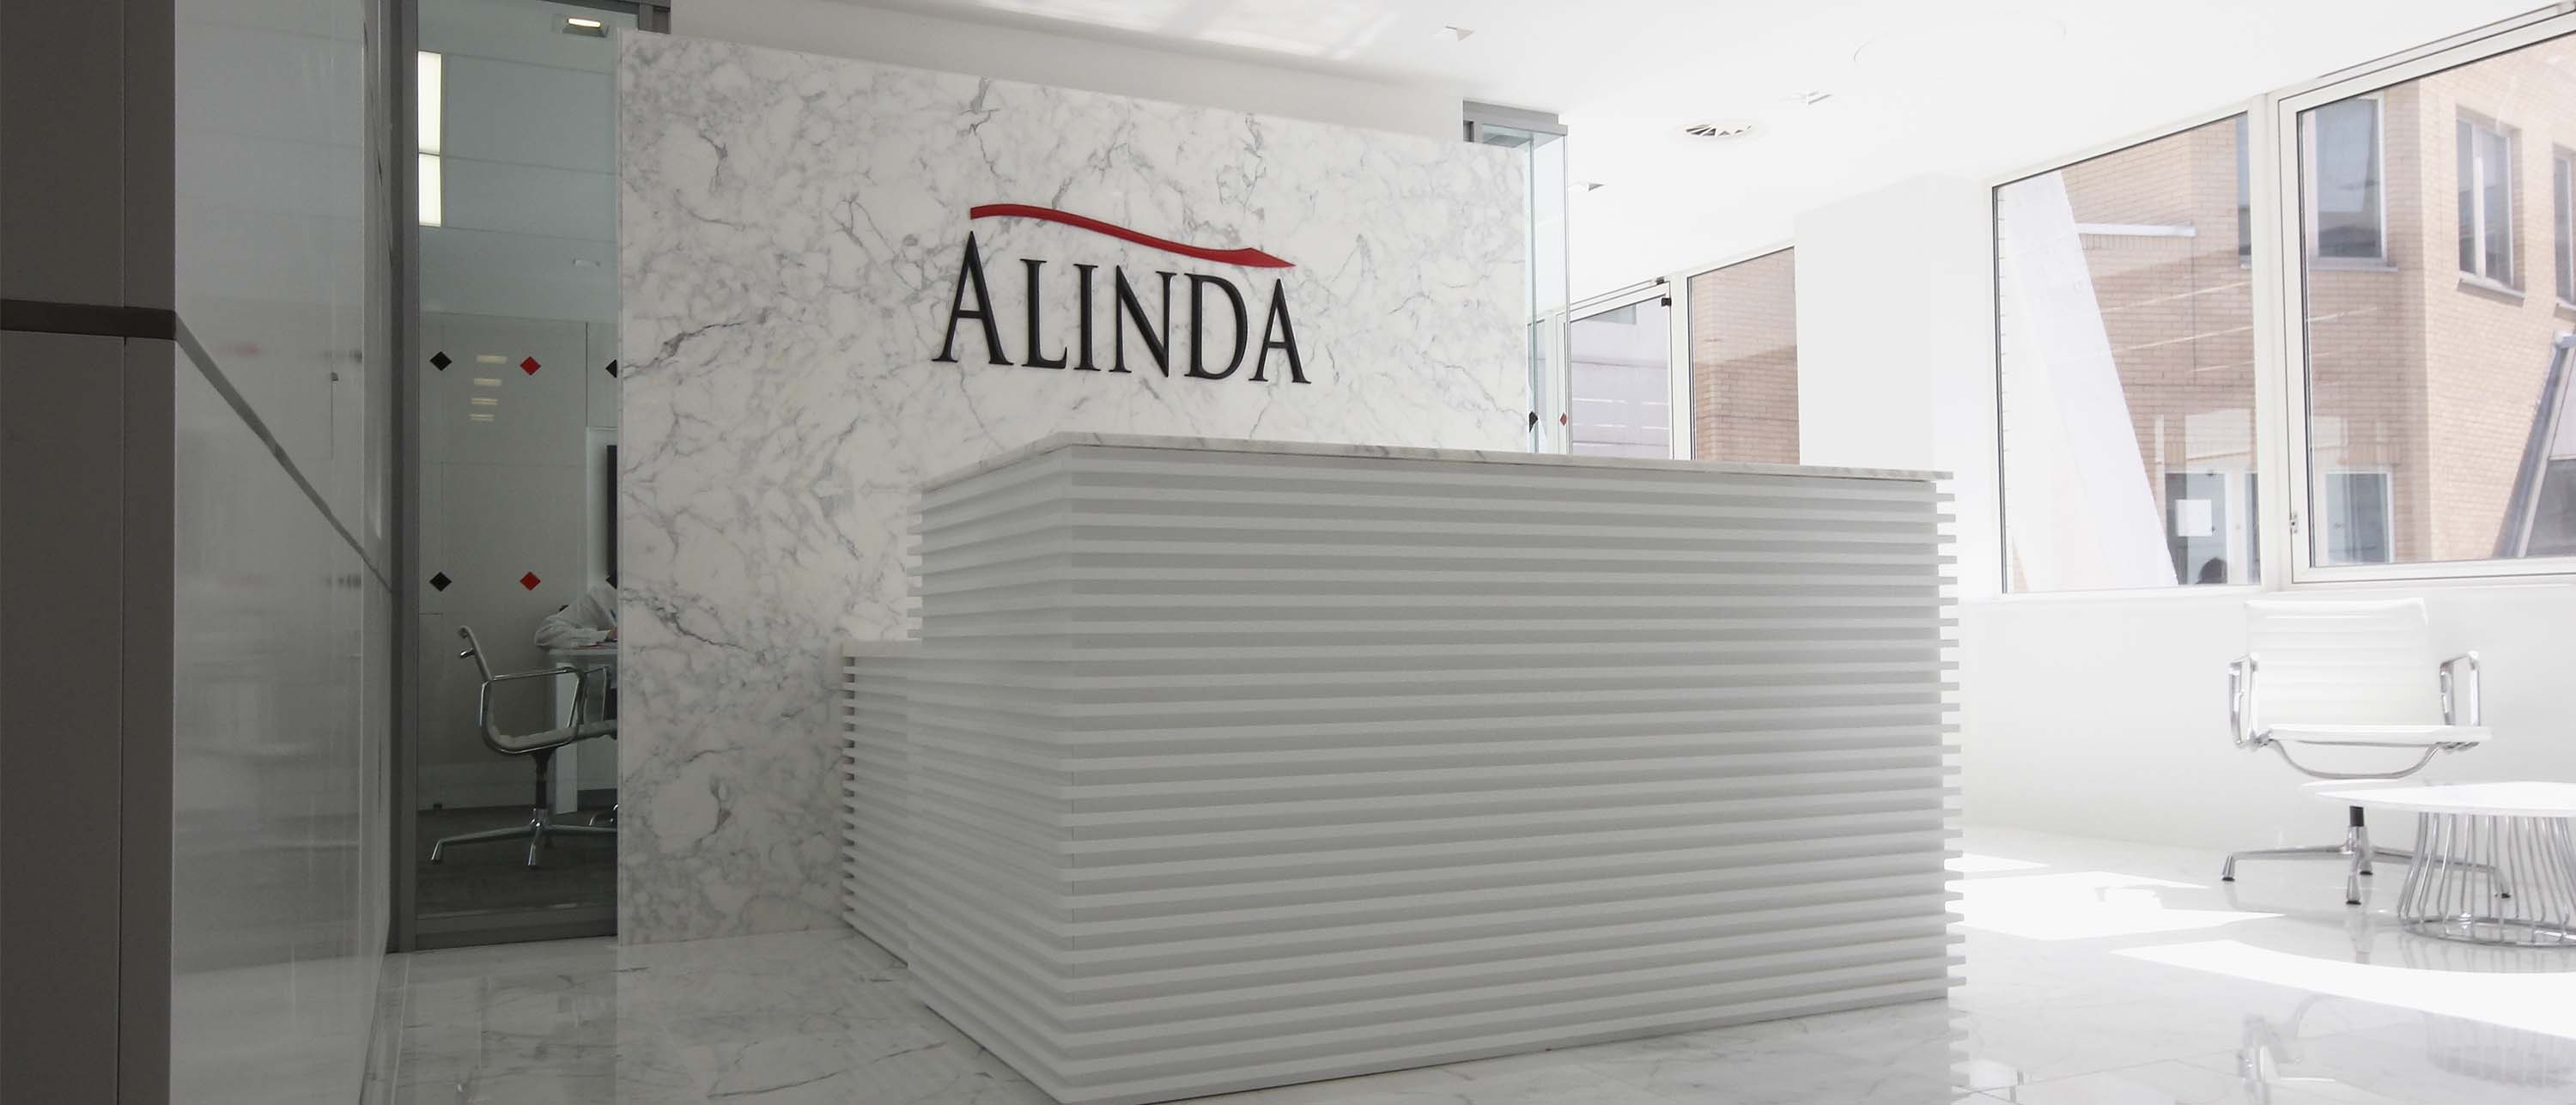 Alinda Capital Partners